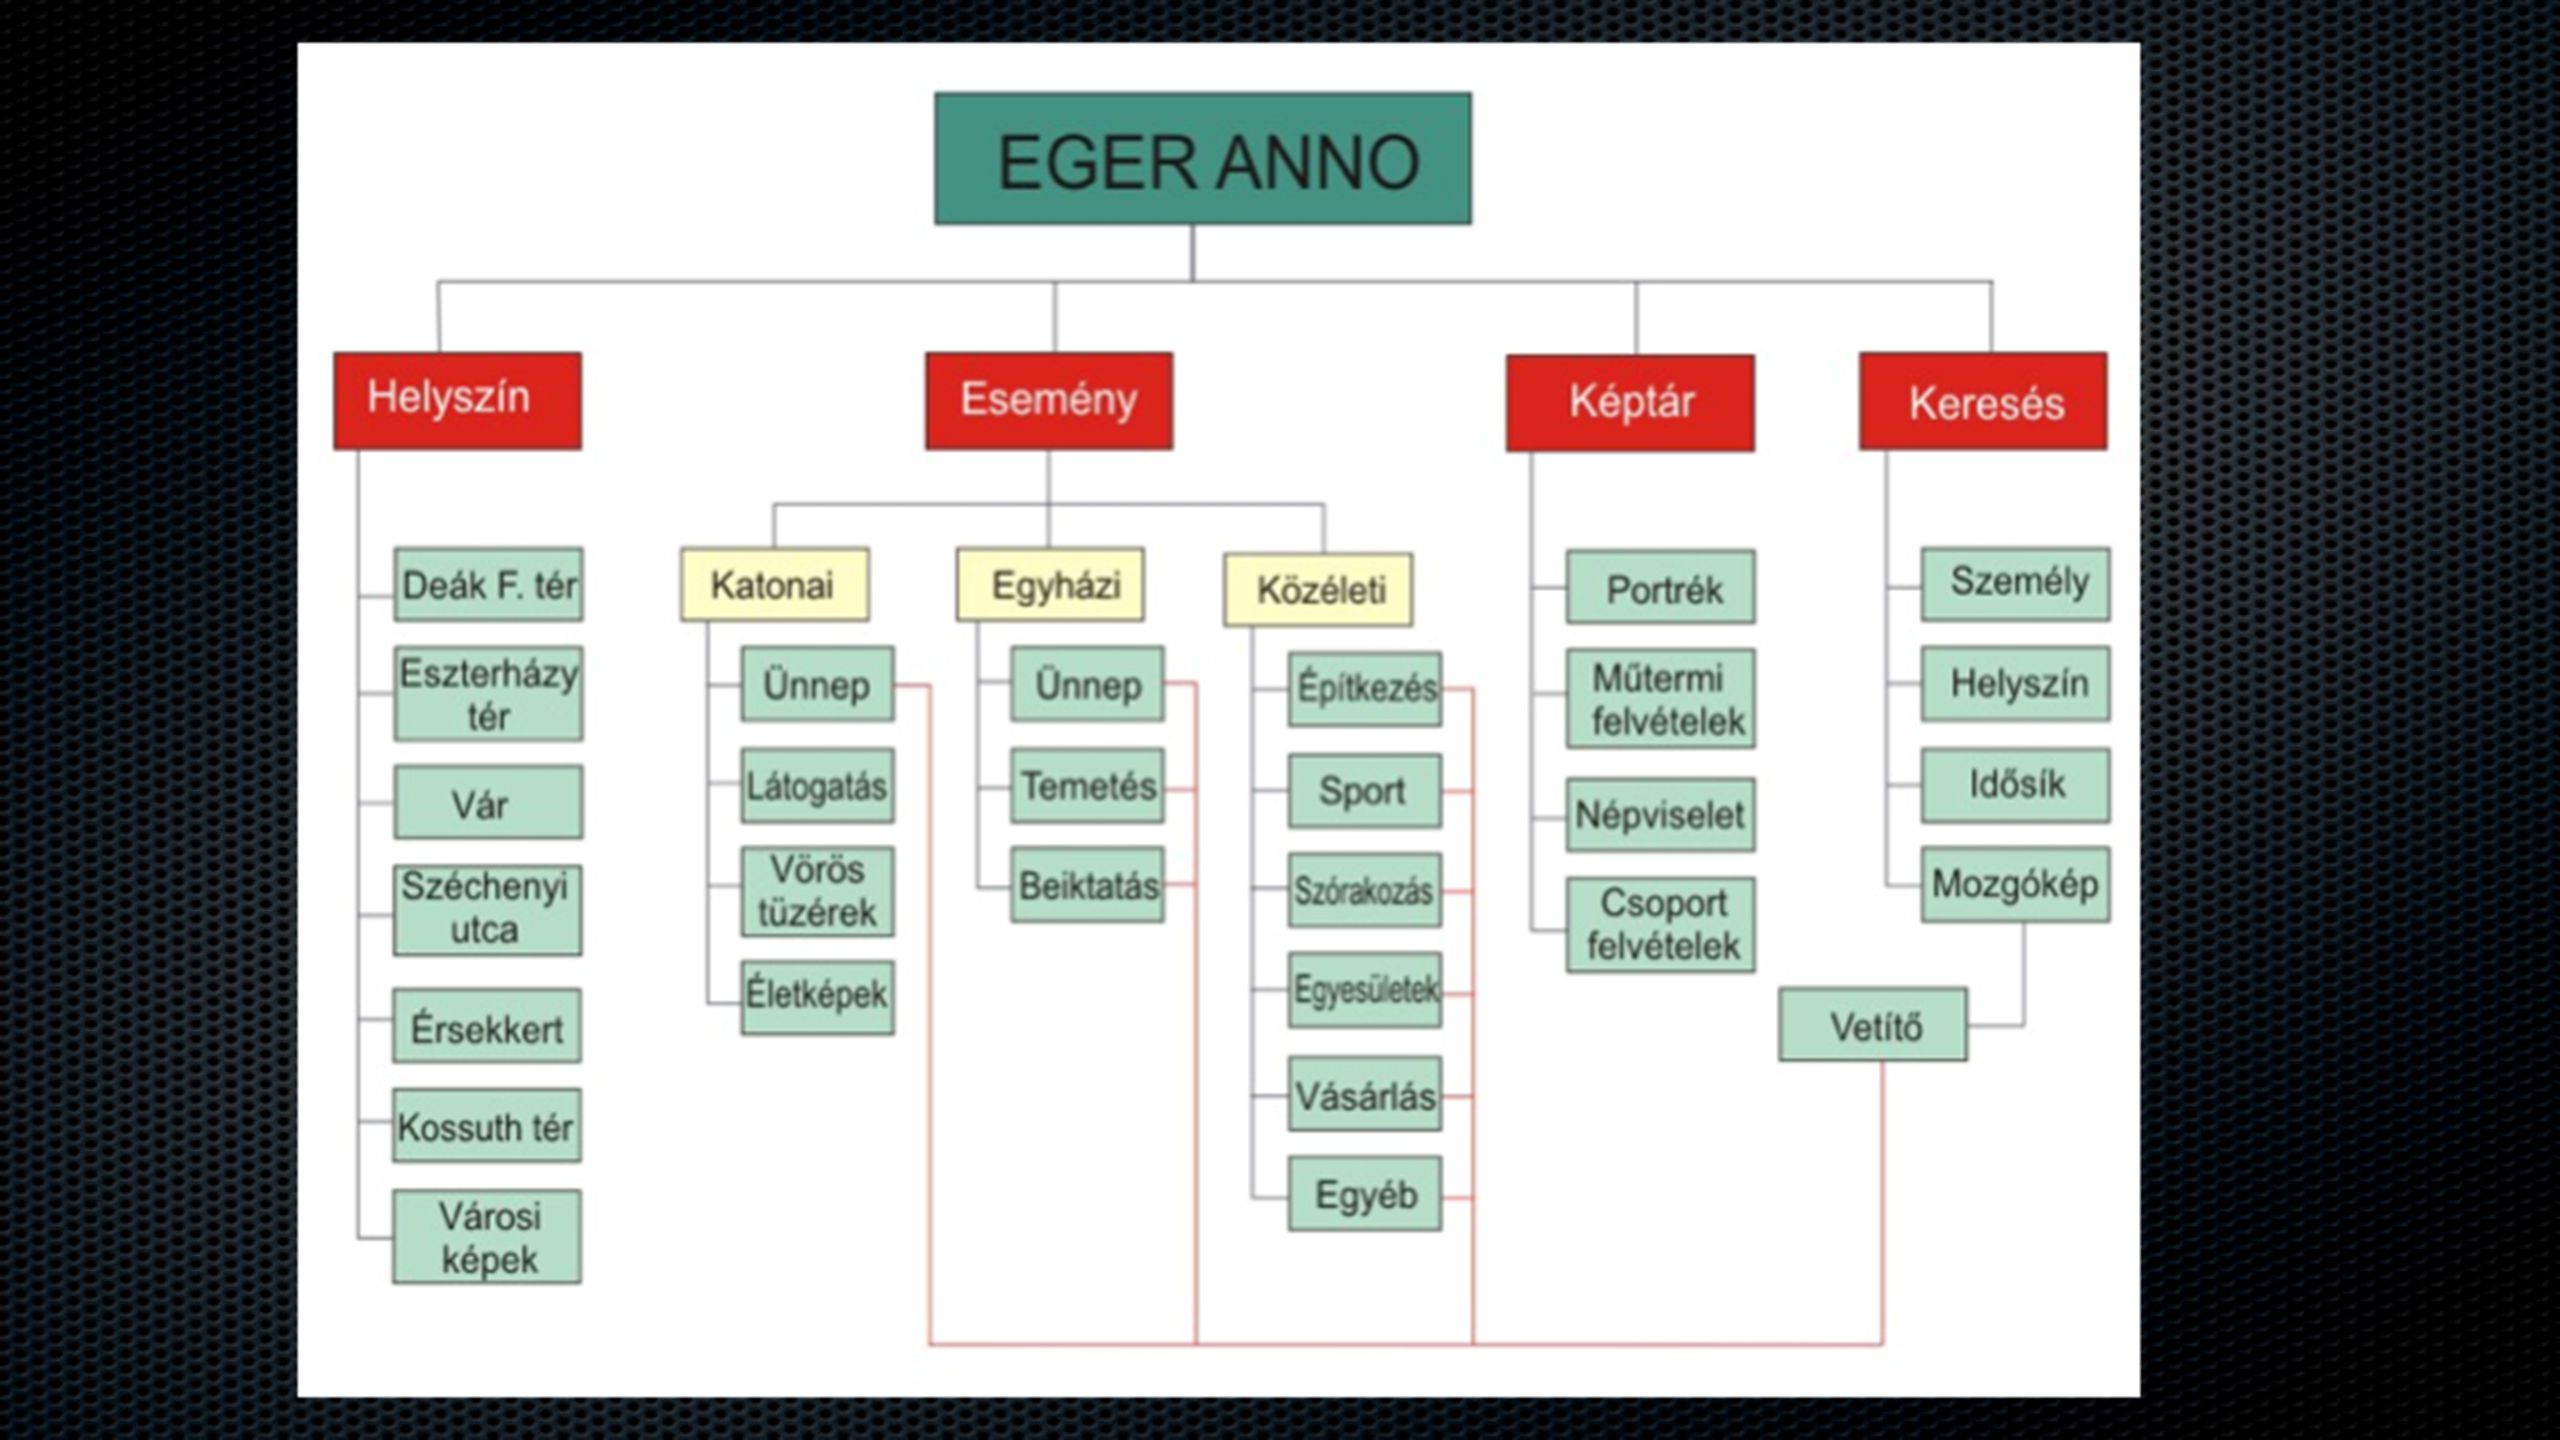 Az Eger Anno multimédia navigációs struktúrája